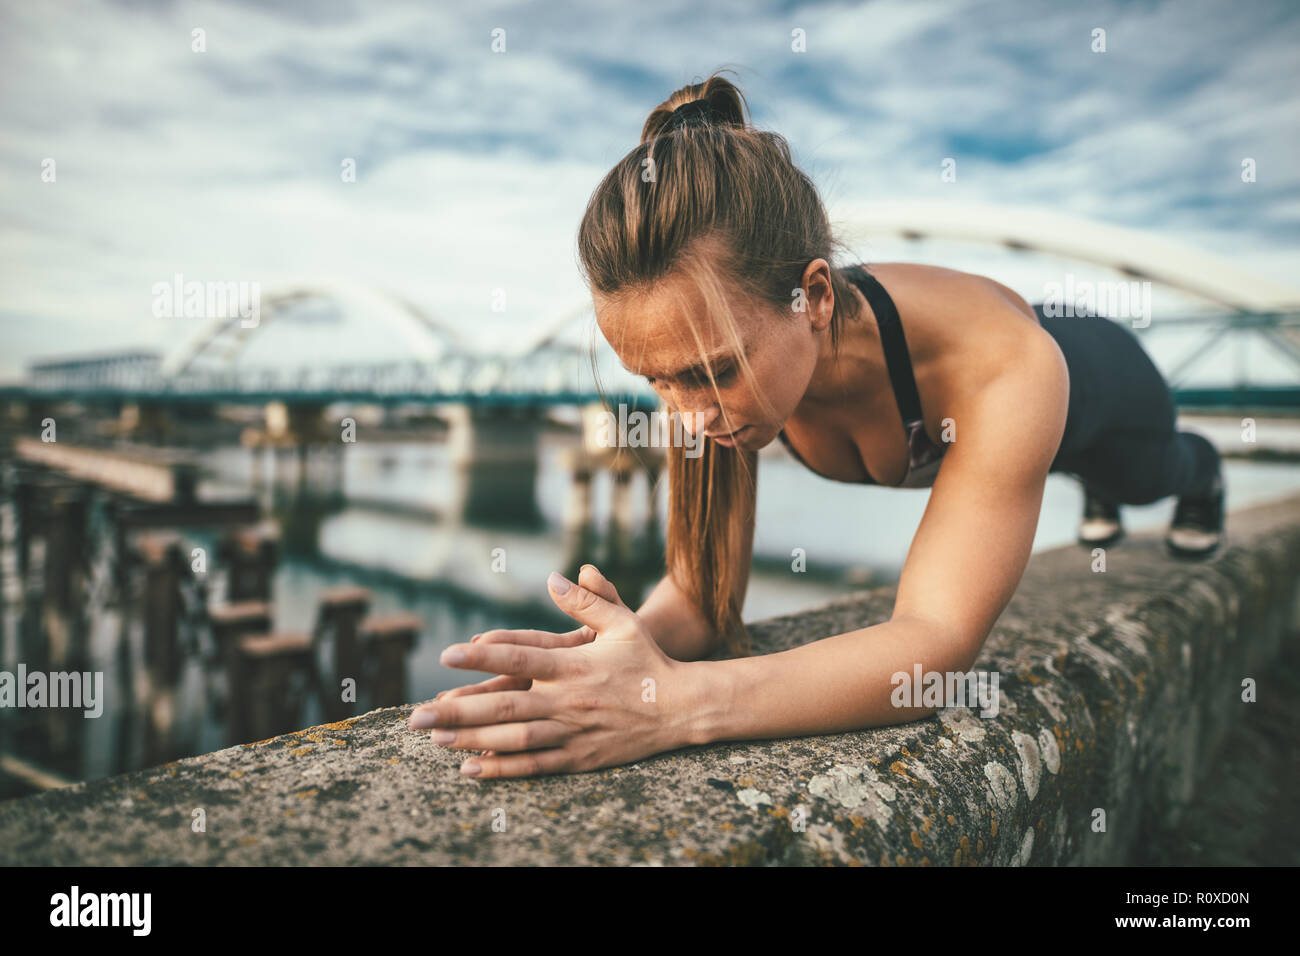 Young Sport Frau tun plank Übung auf der Wand während outdoor Cross Training durch den Fluss fokussiert. Stockfoto